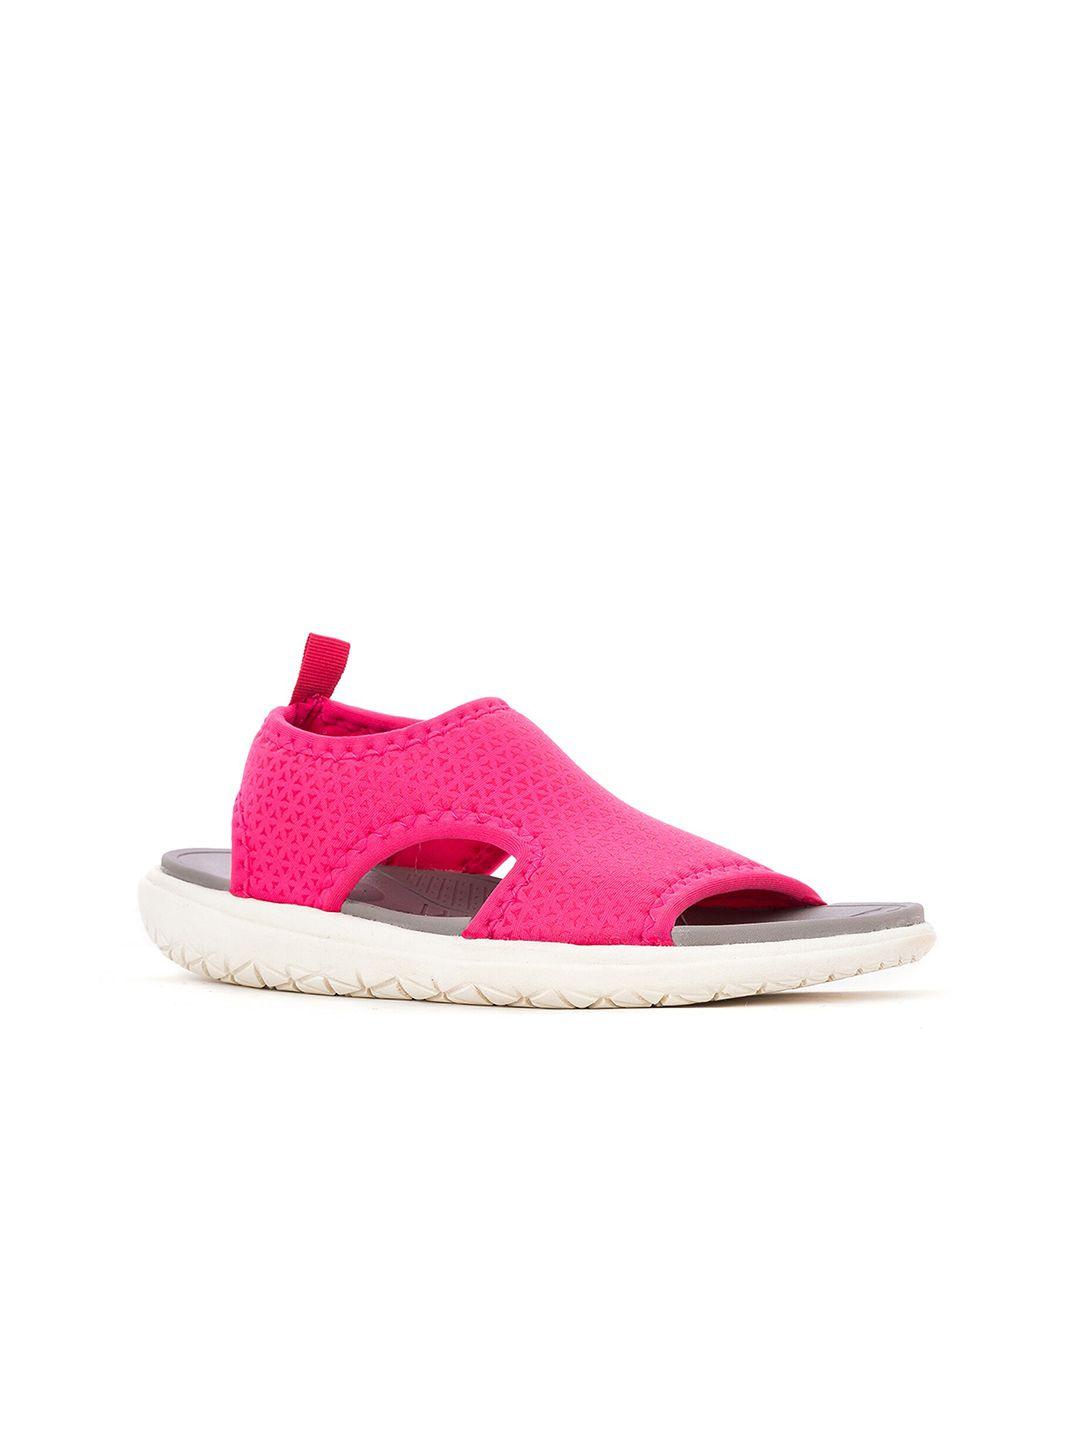 khadims-women-pink-&-white-comfort-sandals